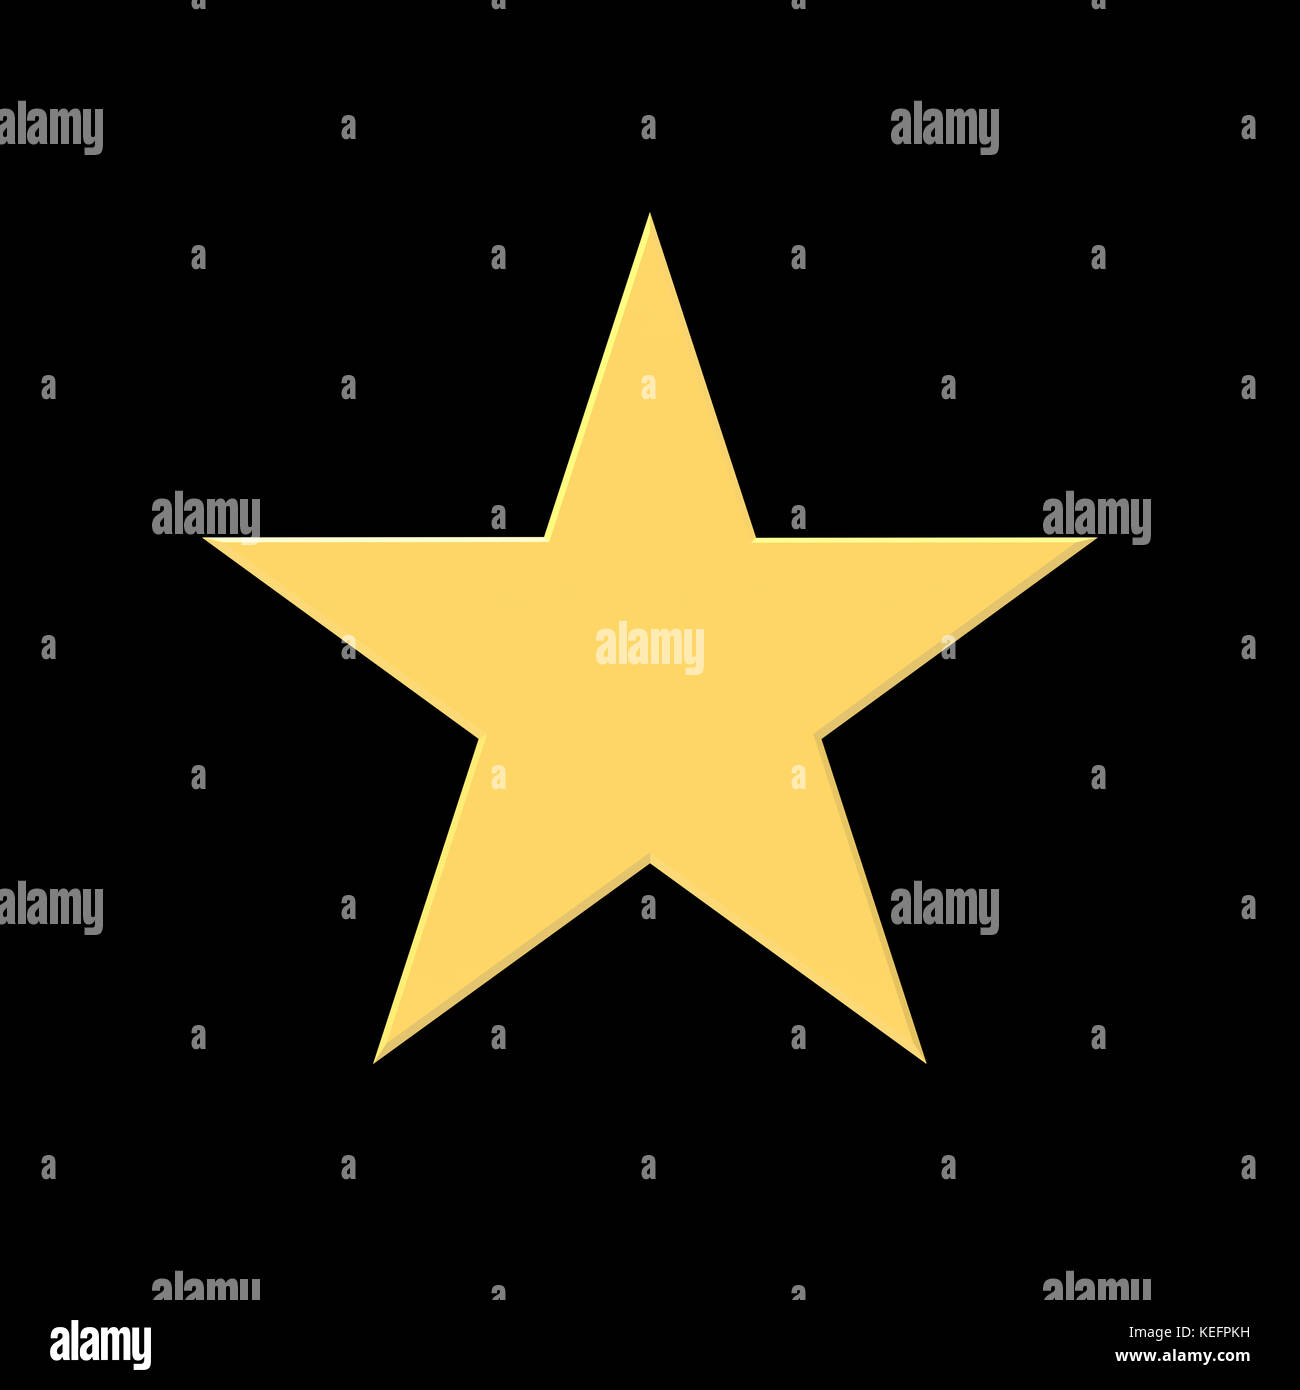 the golden star